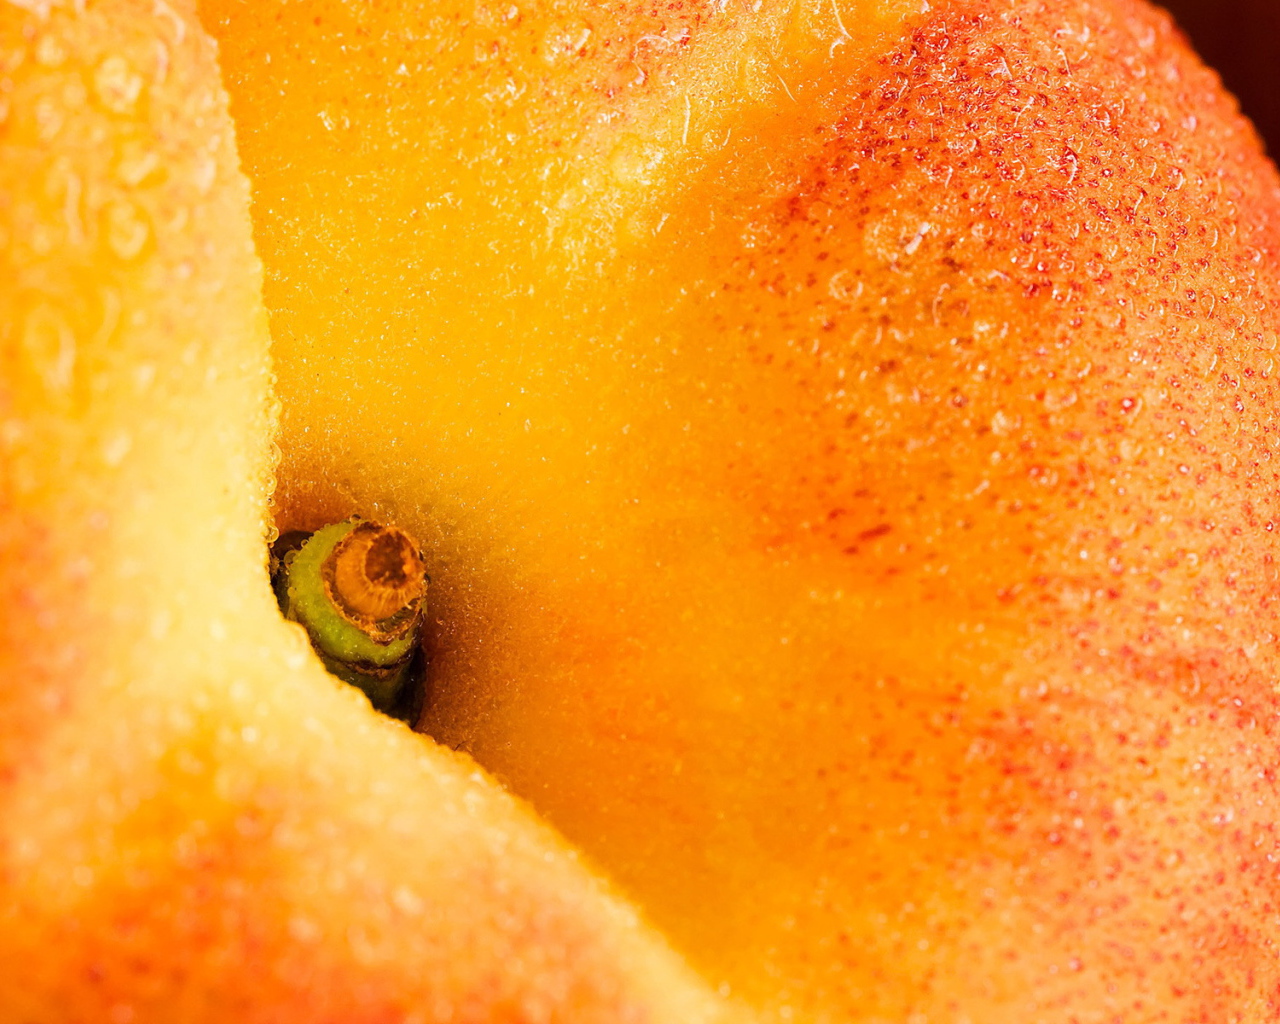 The cuttings of peach